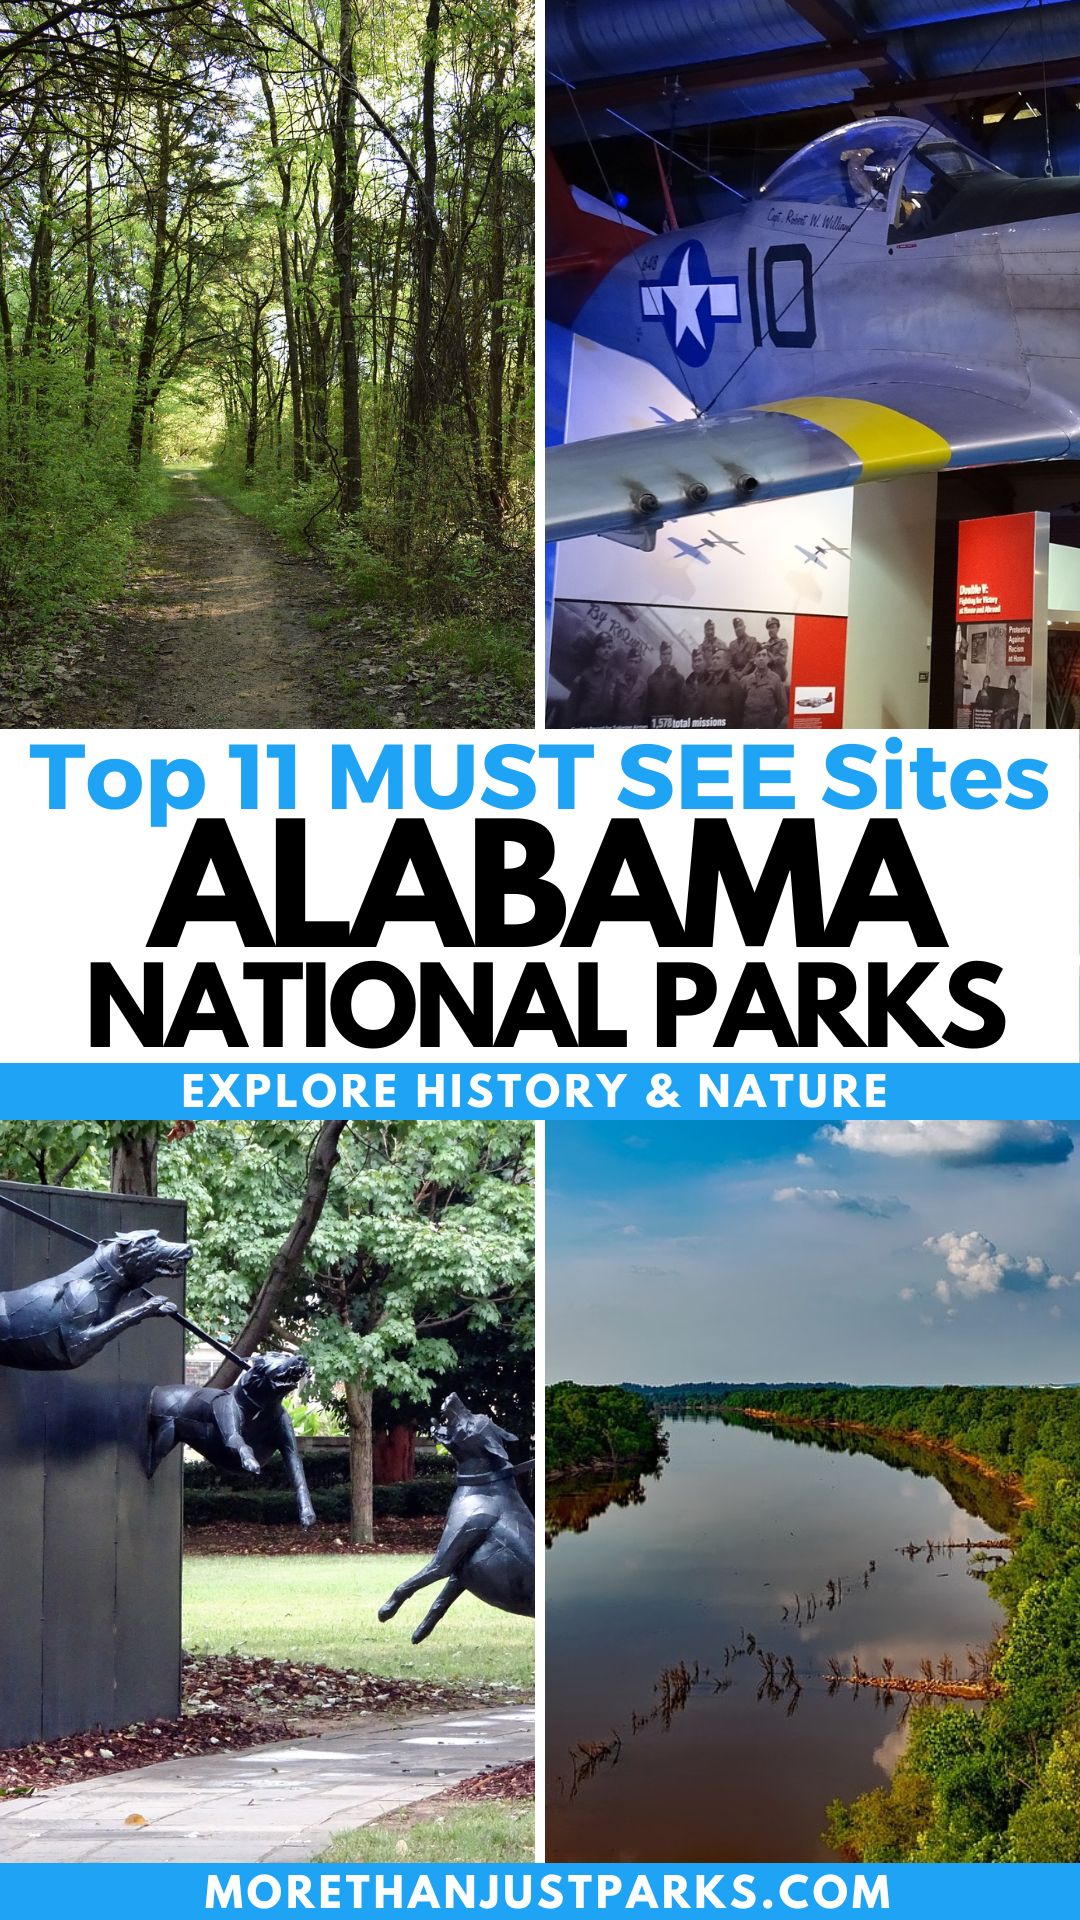 Alabama National Parks